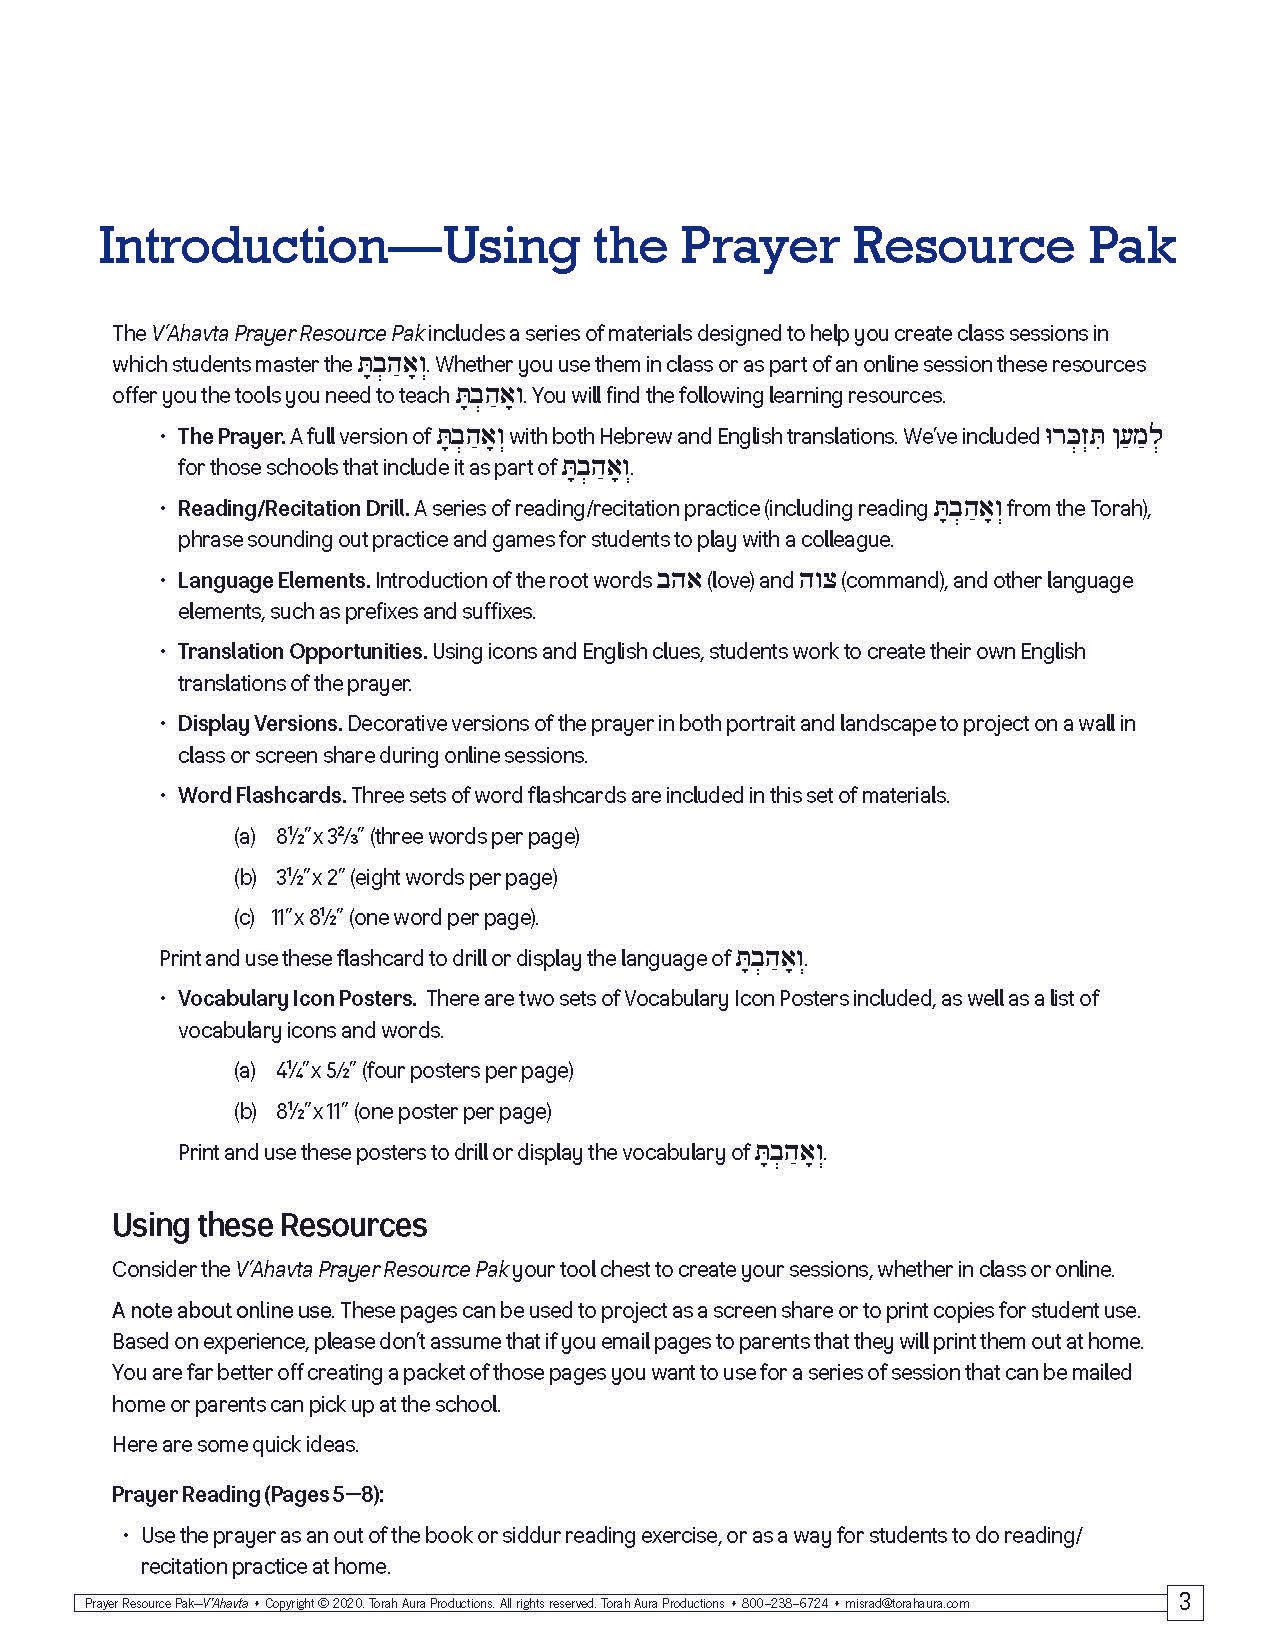 Prayer Resource Pack: V'Ahavta